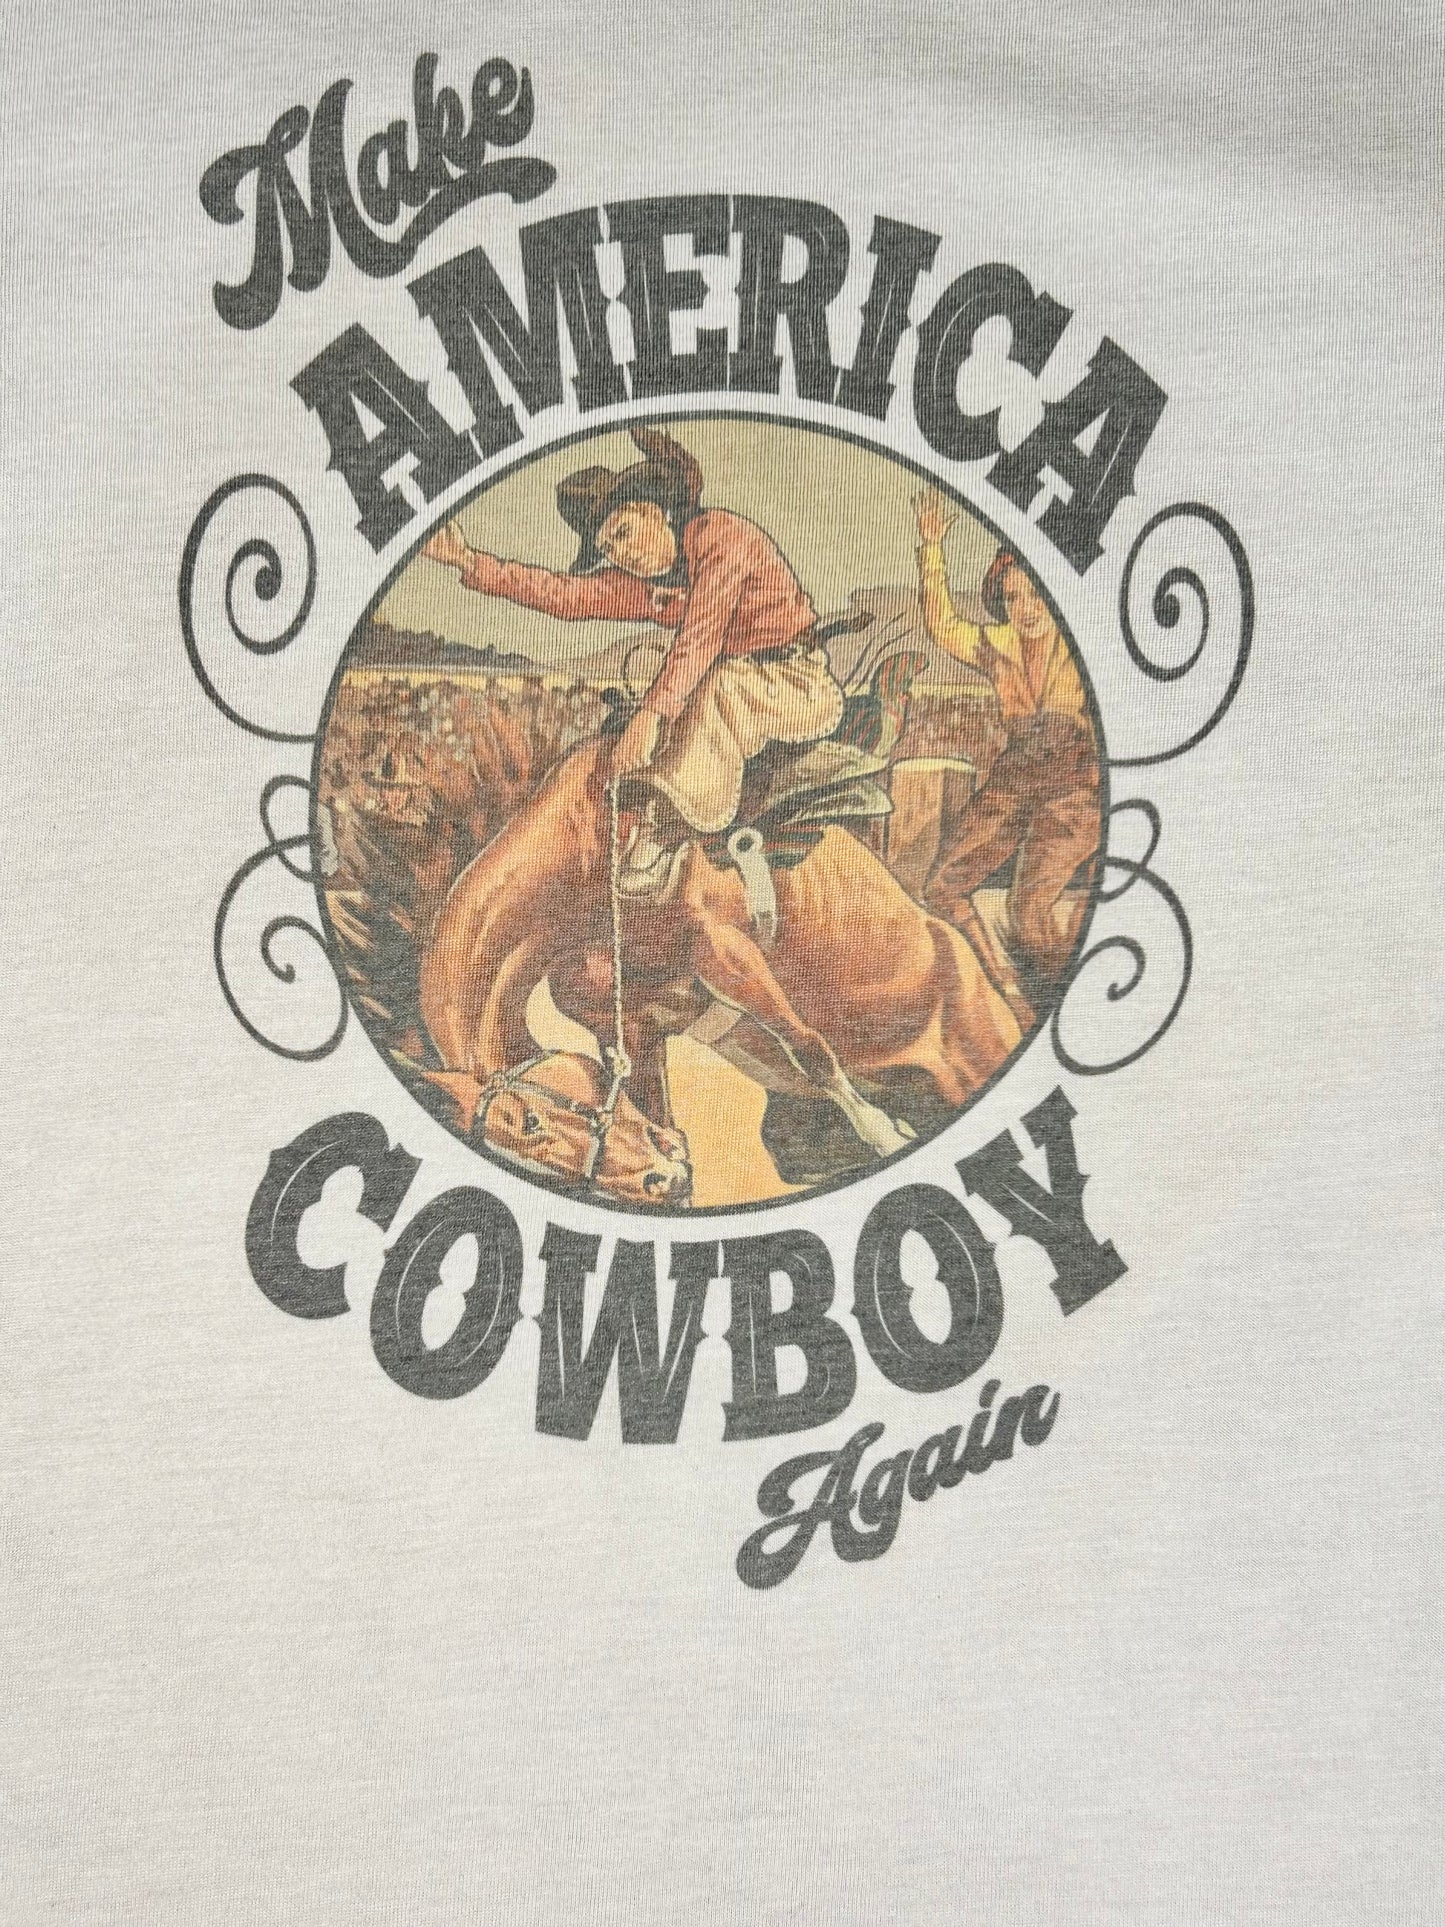 The American Cowboy